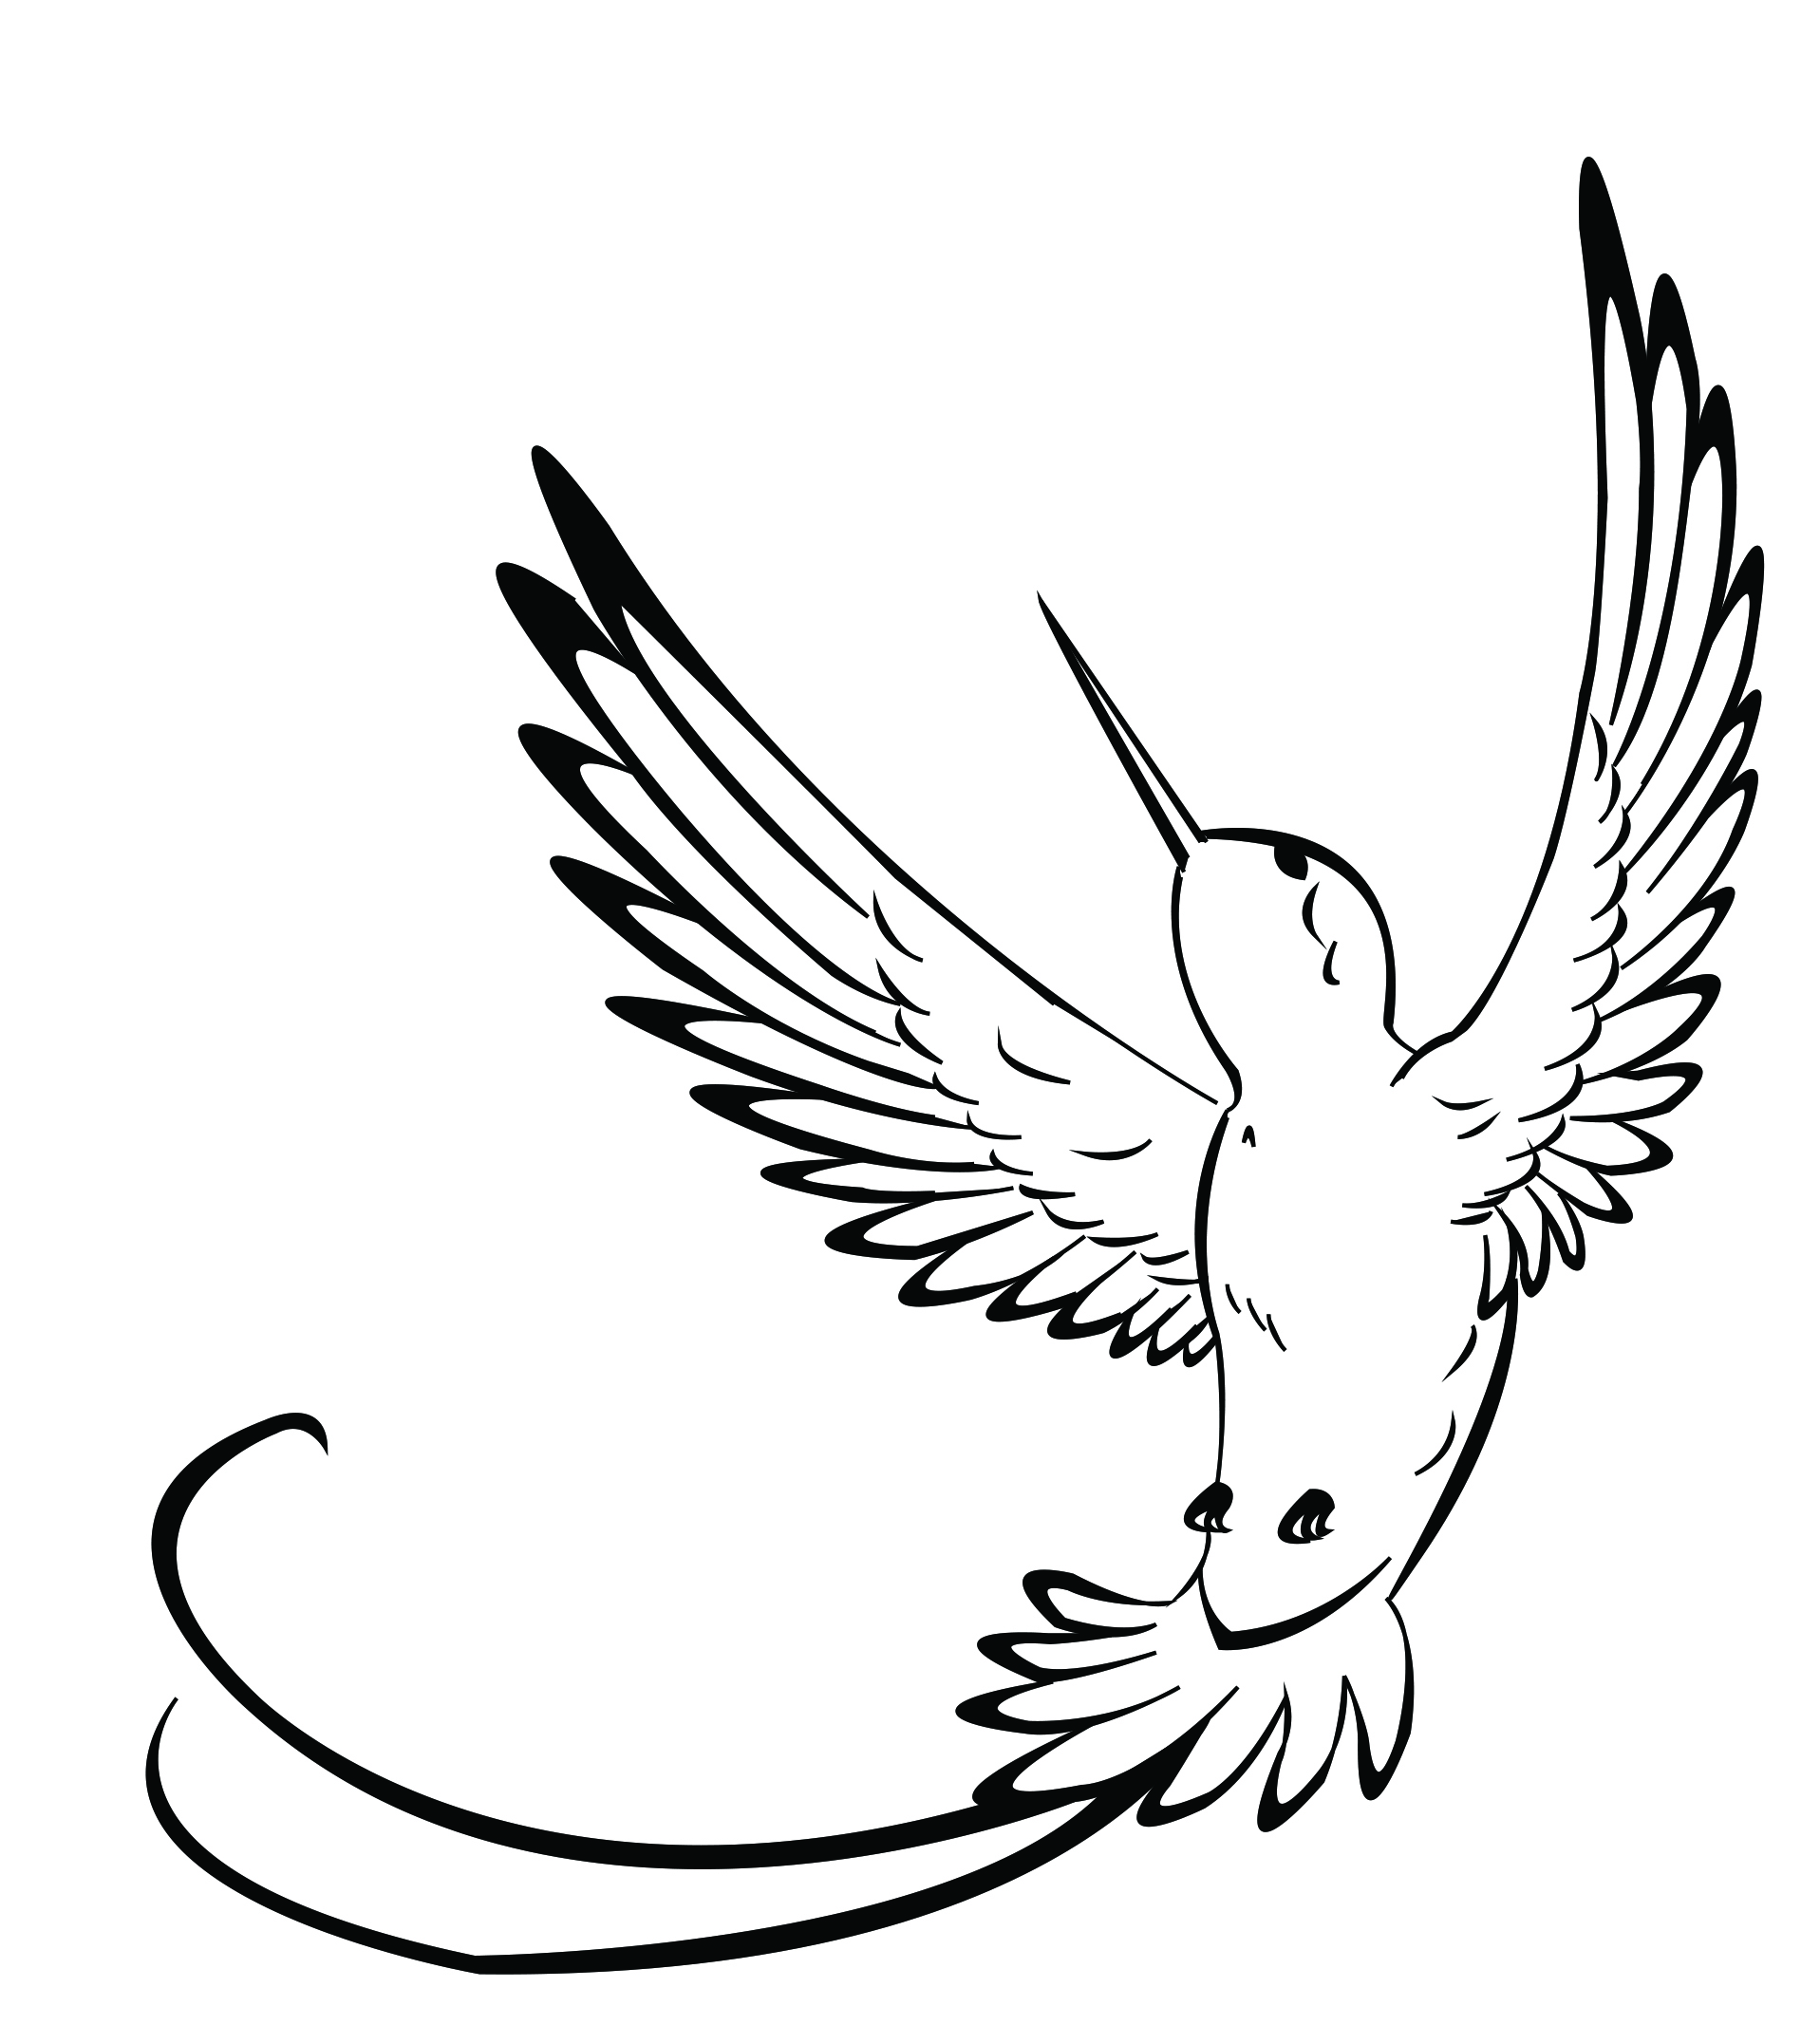 a graphic design process The Hummingbird The Hummingbird